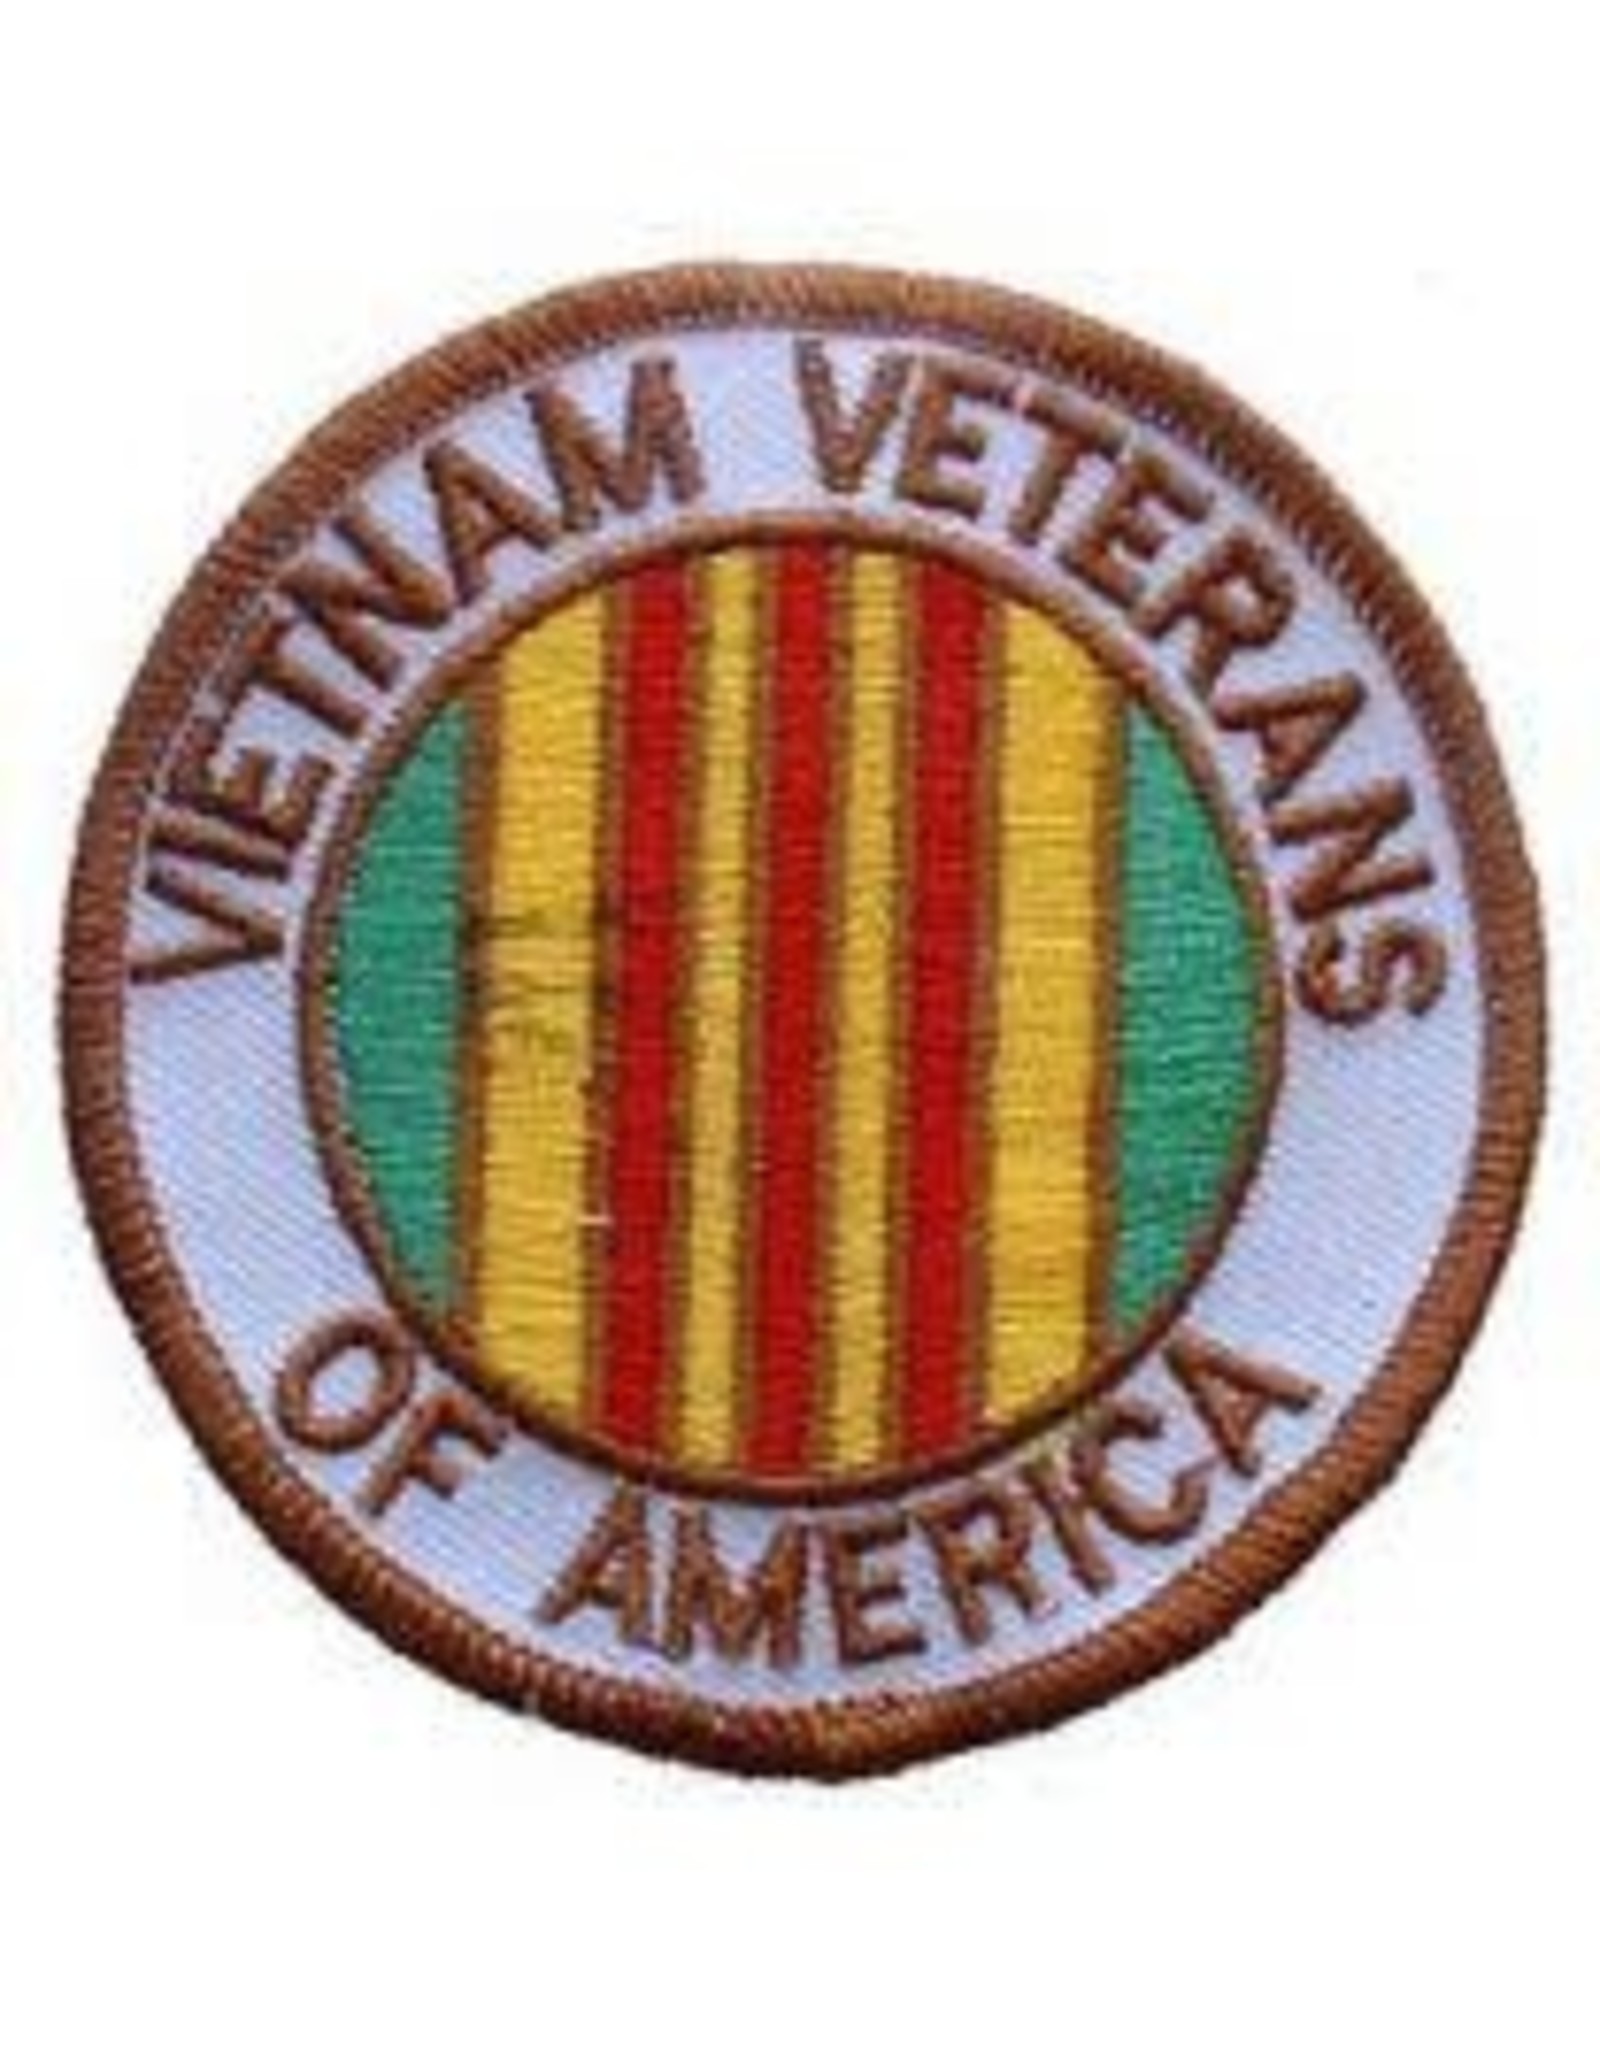 Patch - Vietnam Veterans of America